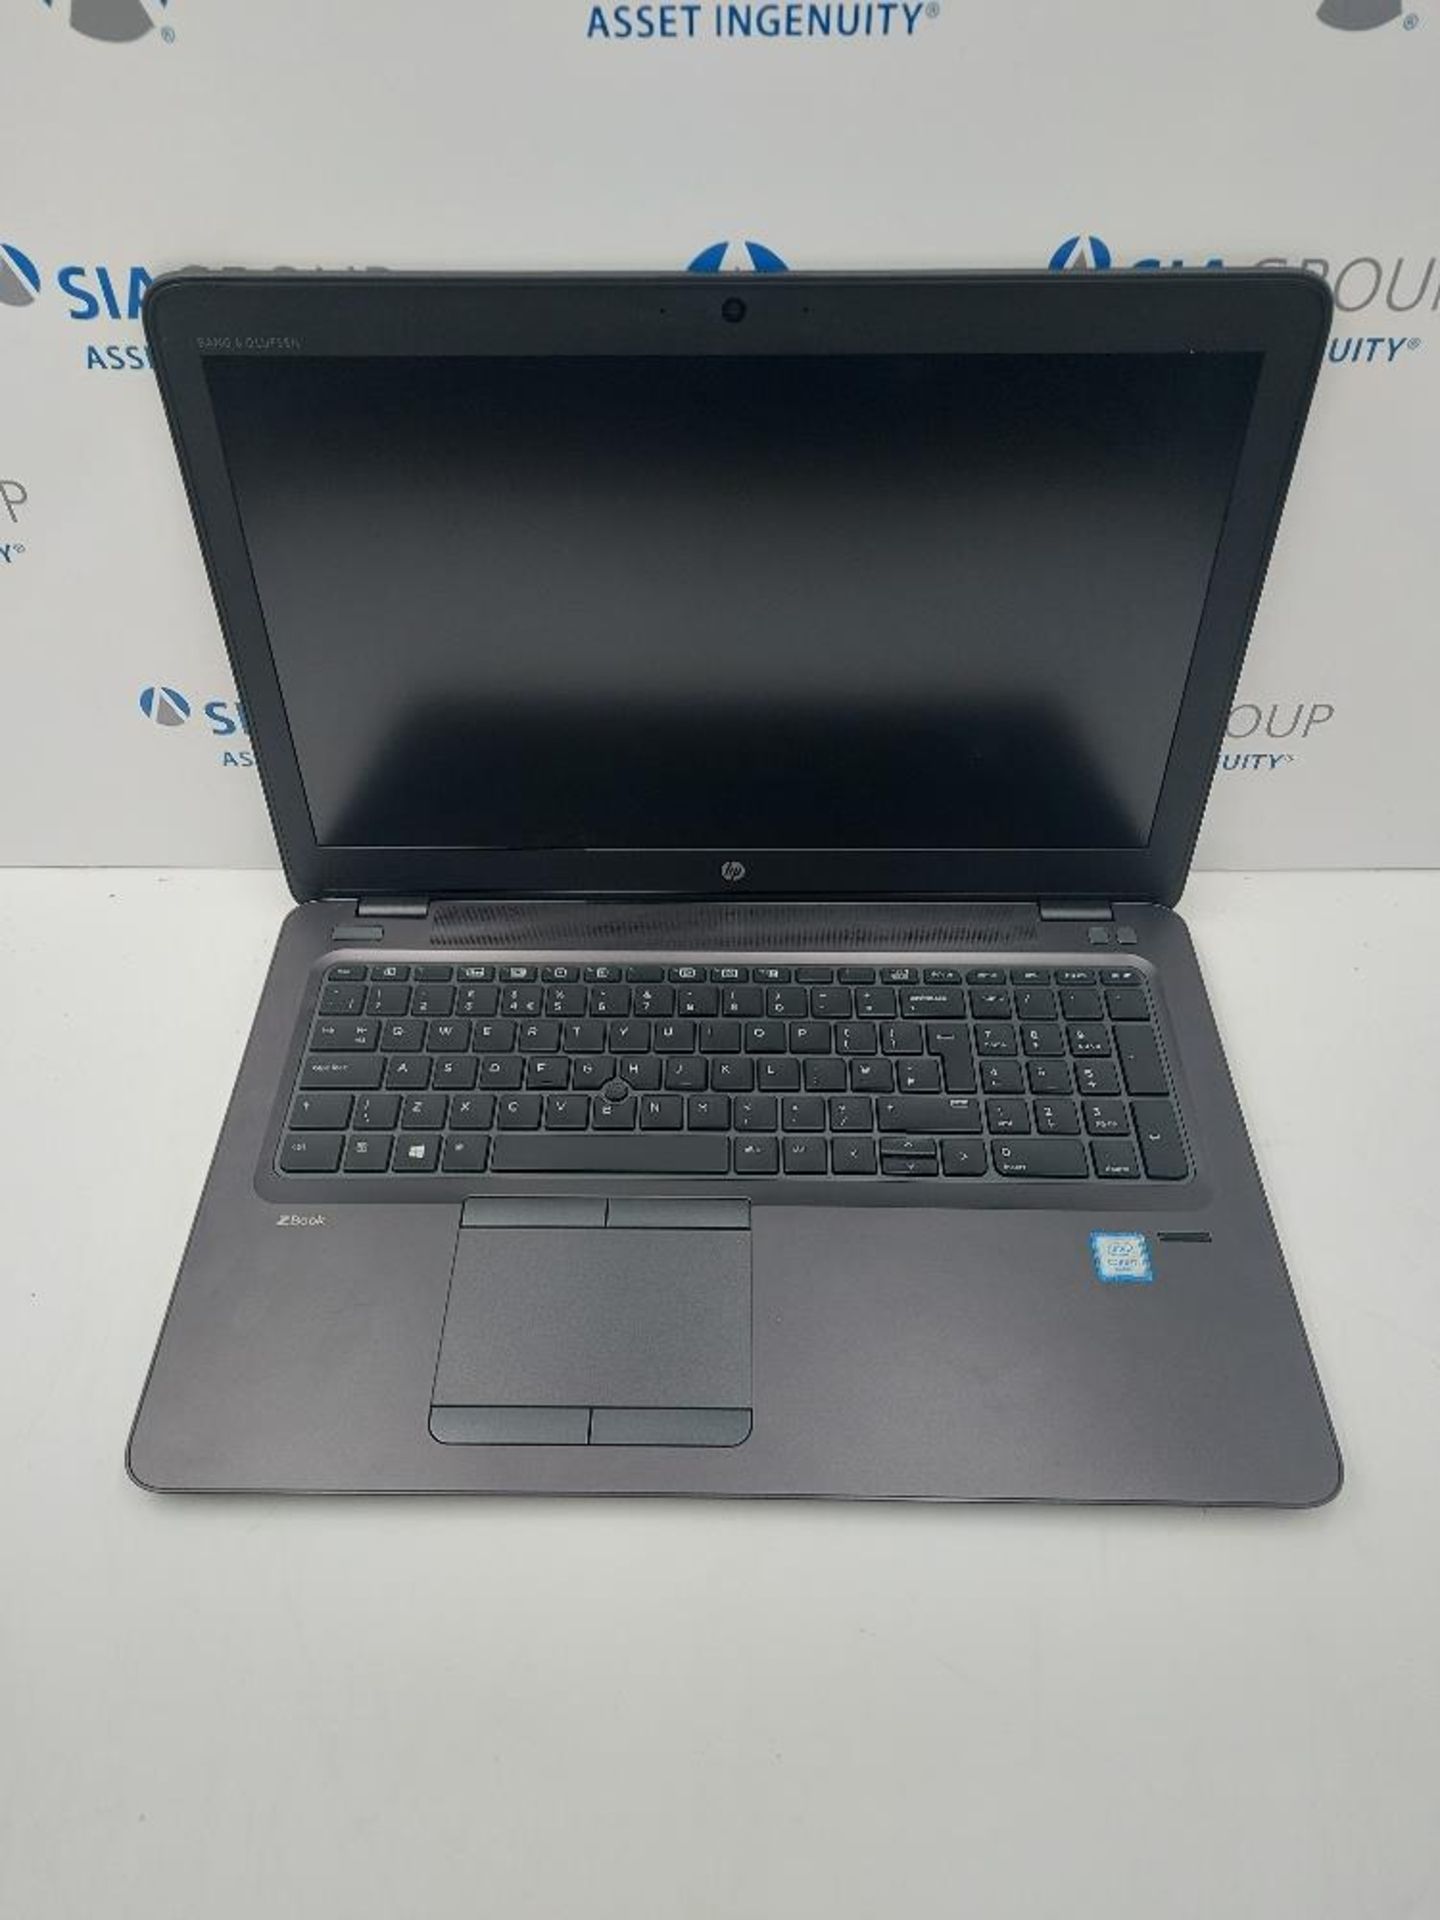 HP Zbook 15u G3 Laptop with Flight Case - Image 3 of 8